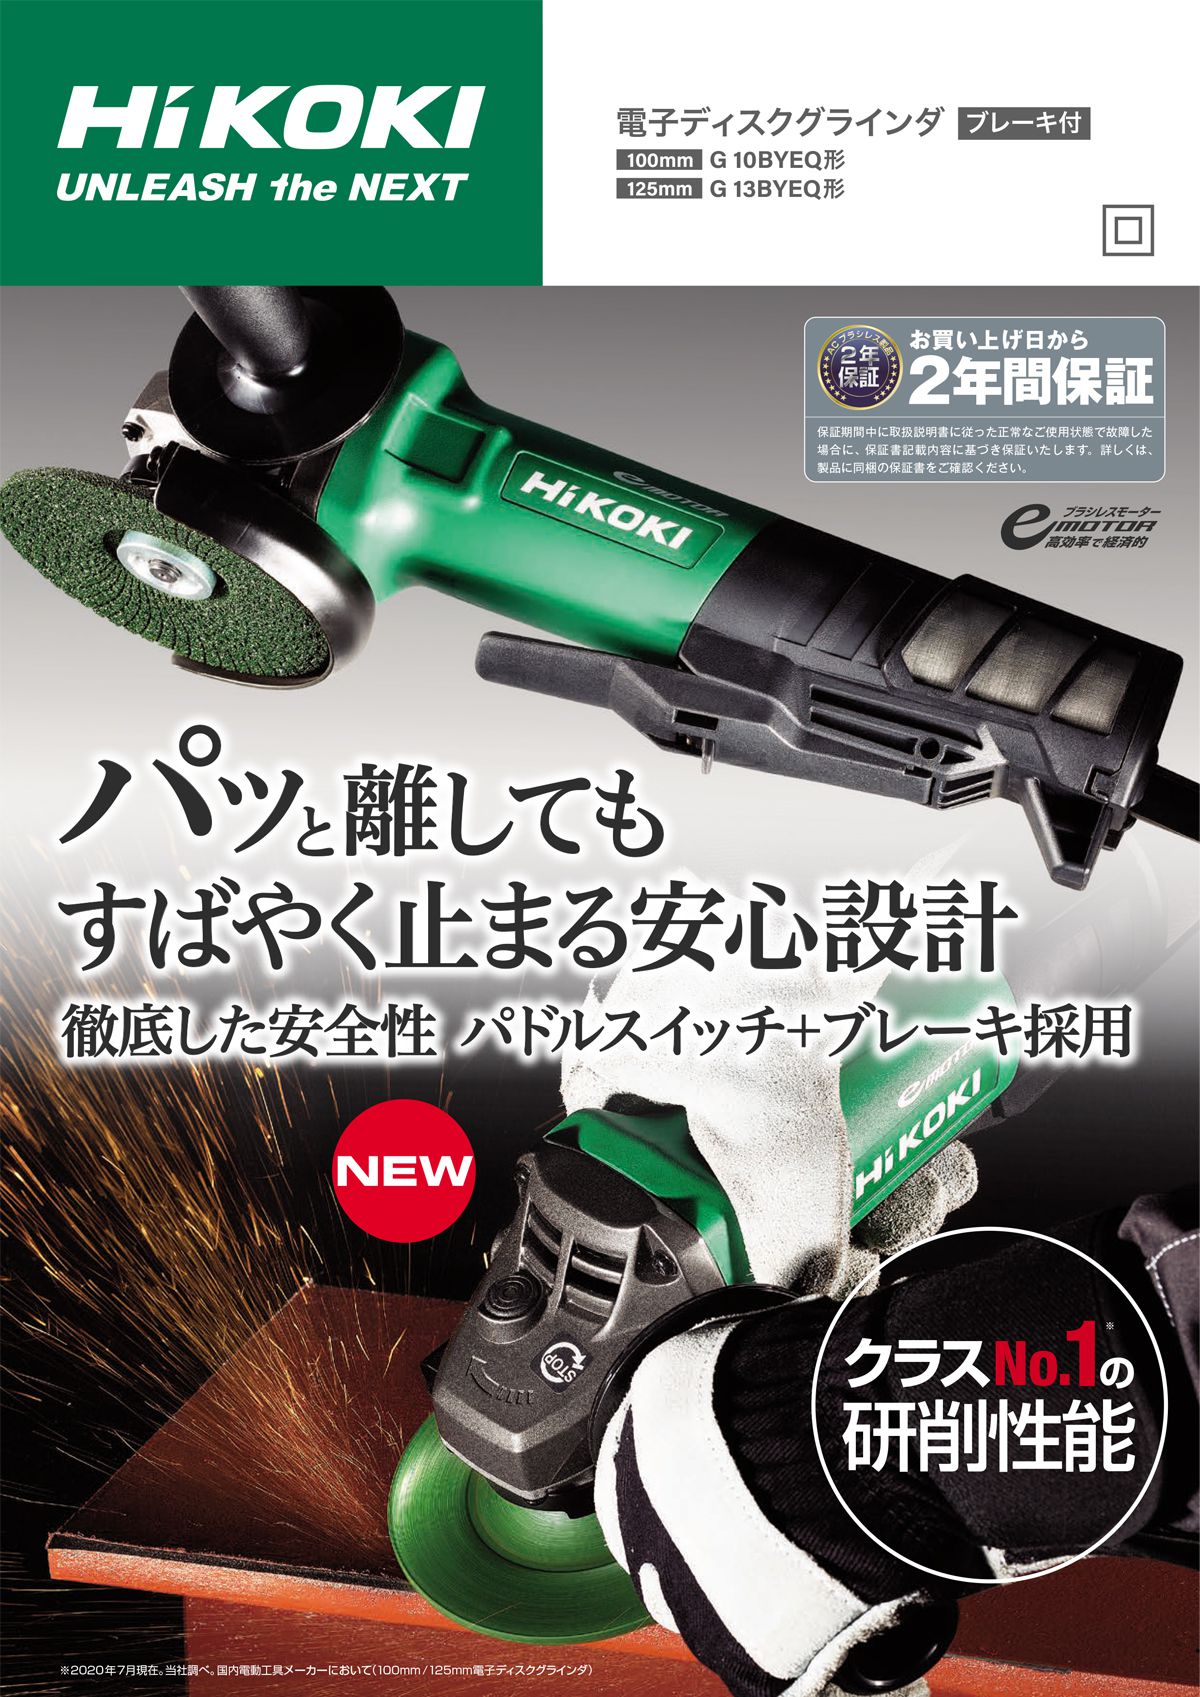 HIKOKI G13BYEQ 電子ディスクグラインダ125mm ウエダ金物【公式サイト】